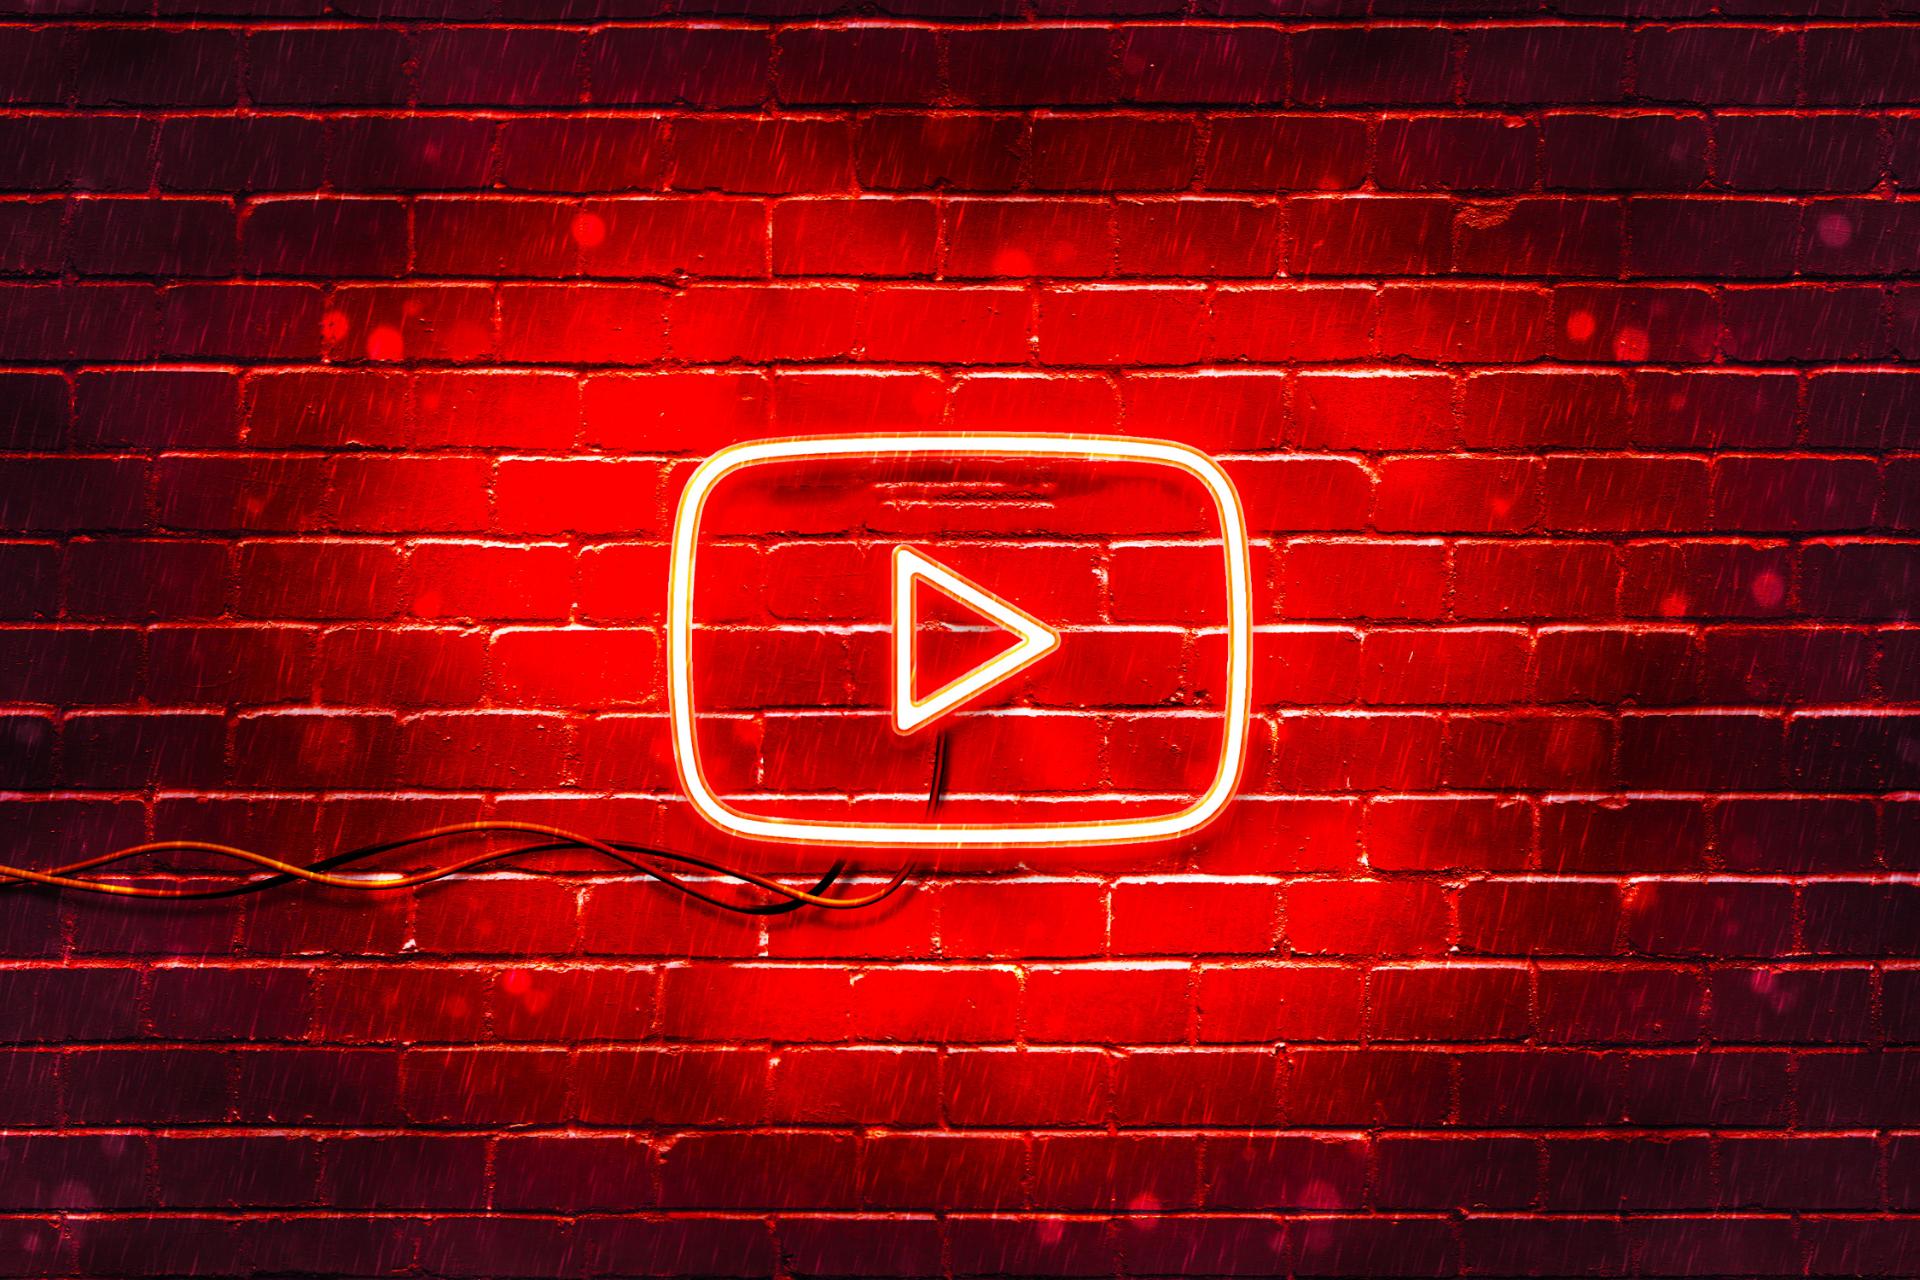 لوگو یوتیوب / YouTube روی دیوار چراغ قرمز